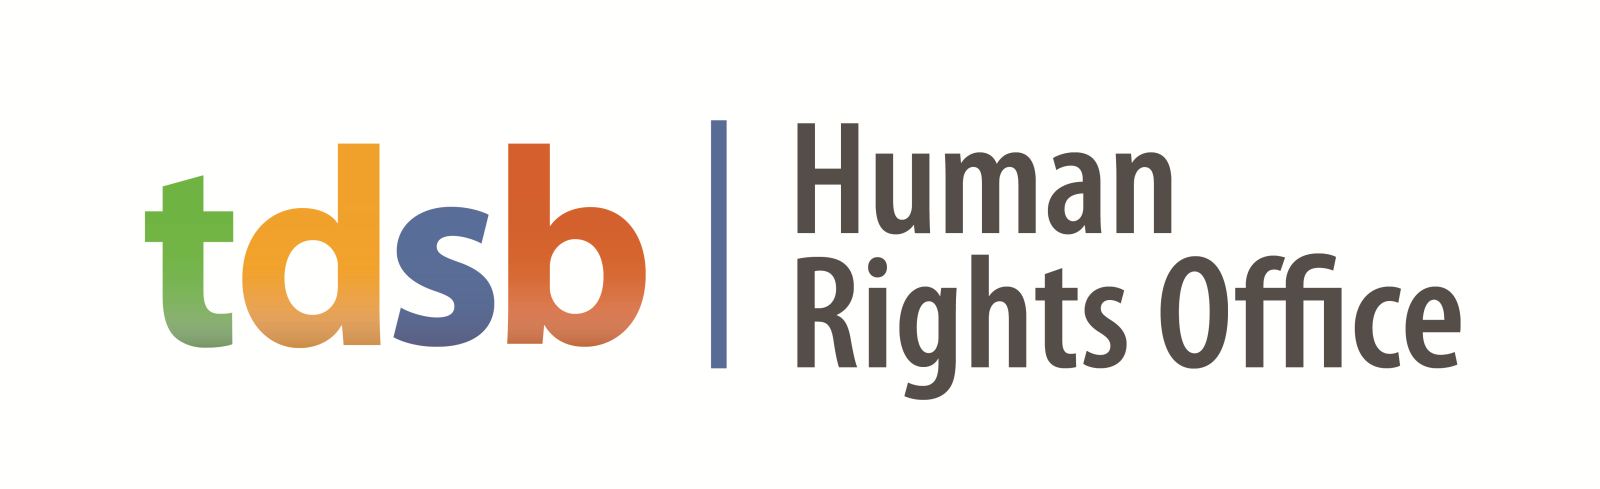 TDSB Human Rights Office logo